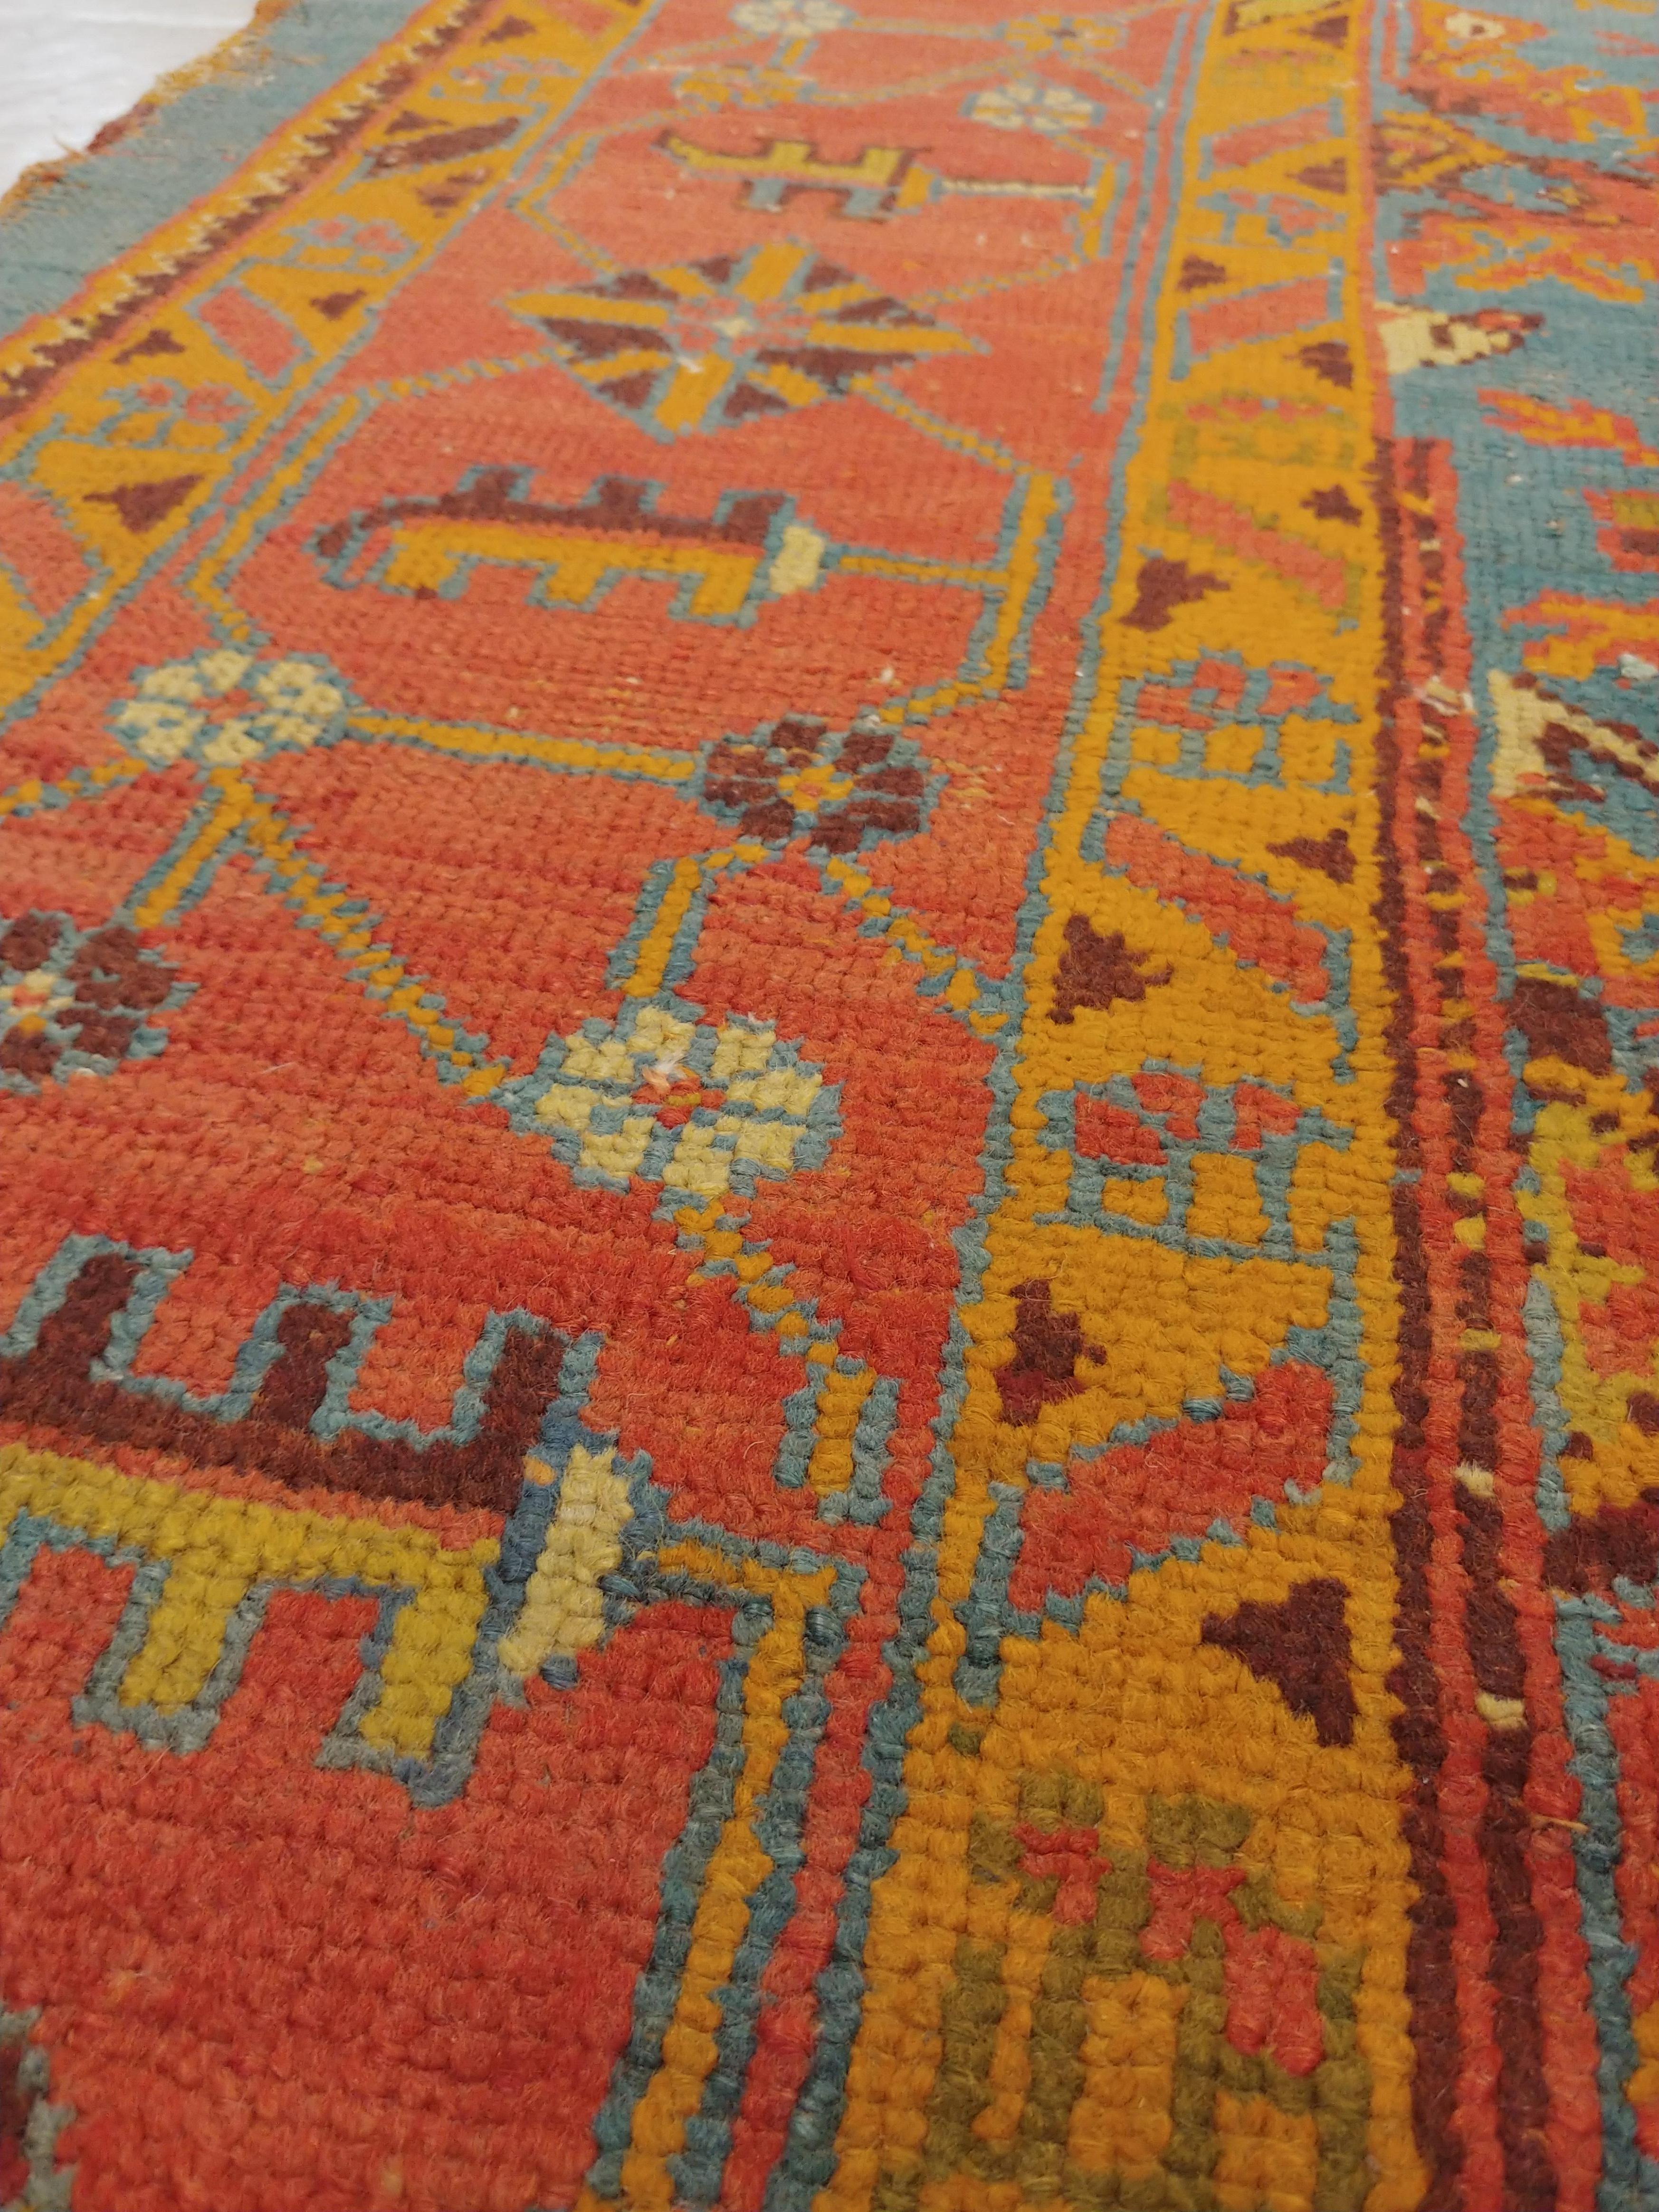 19th Century Antique Oushak Carpet, Handmade Oriental Rug Made in Turkey, Coral, Light Blue